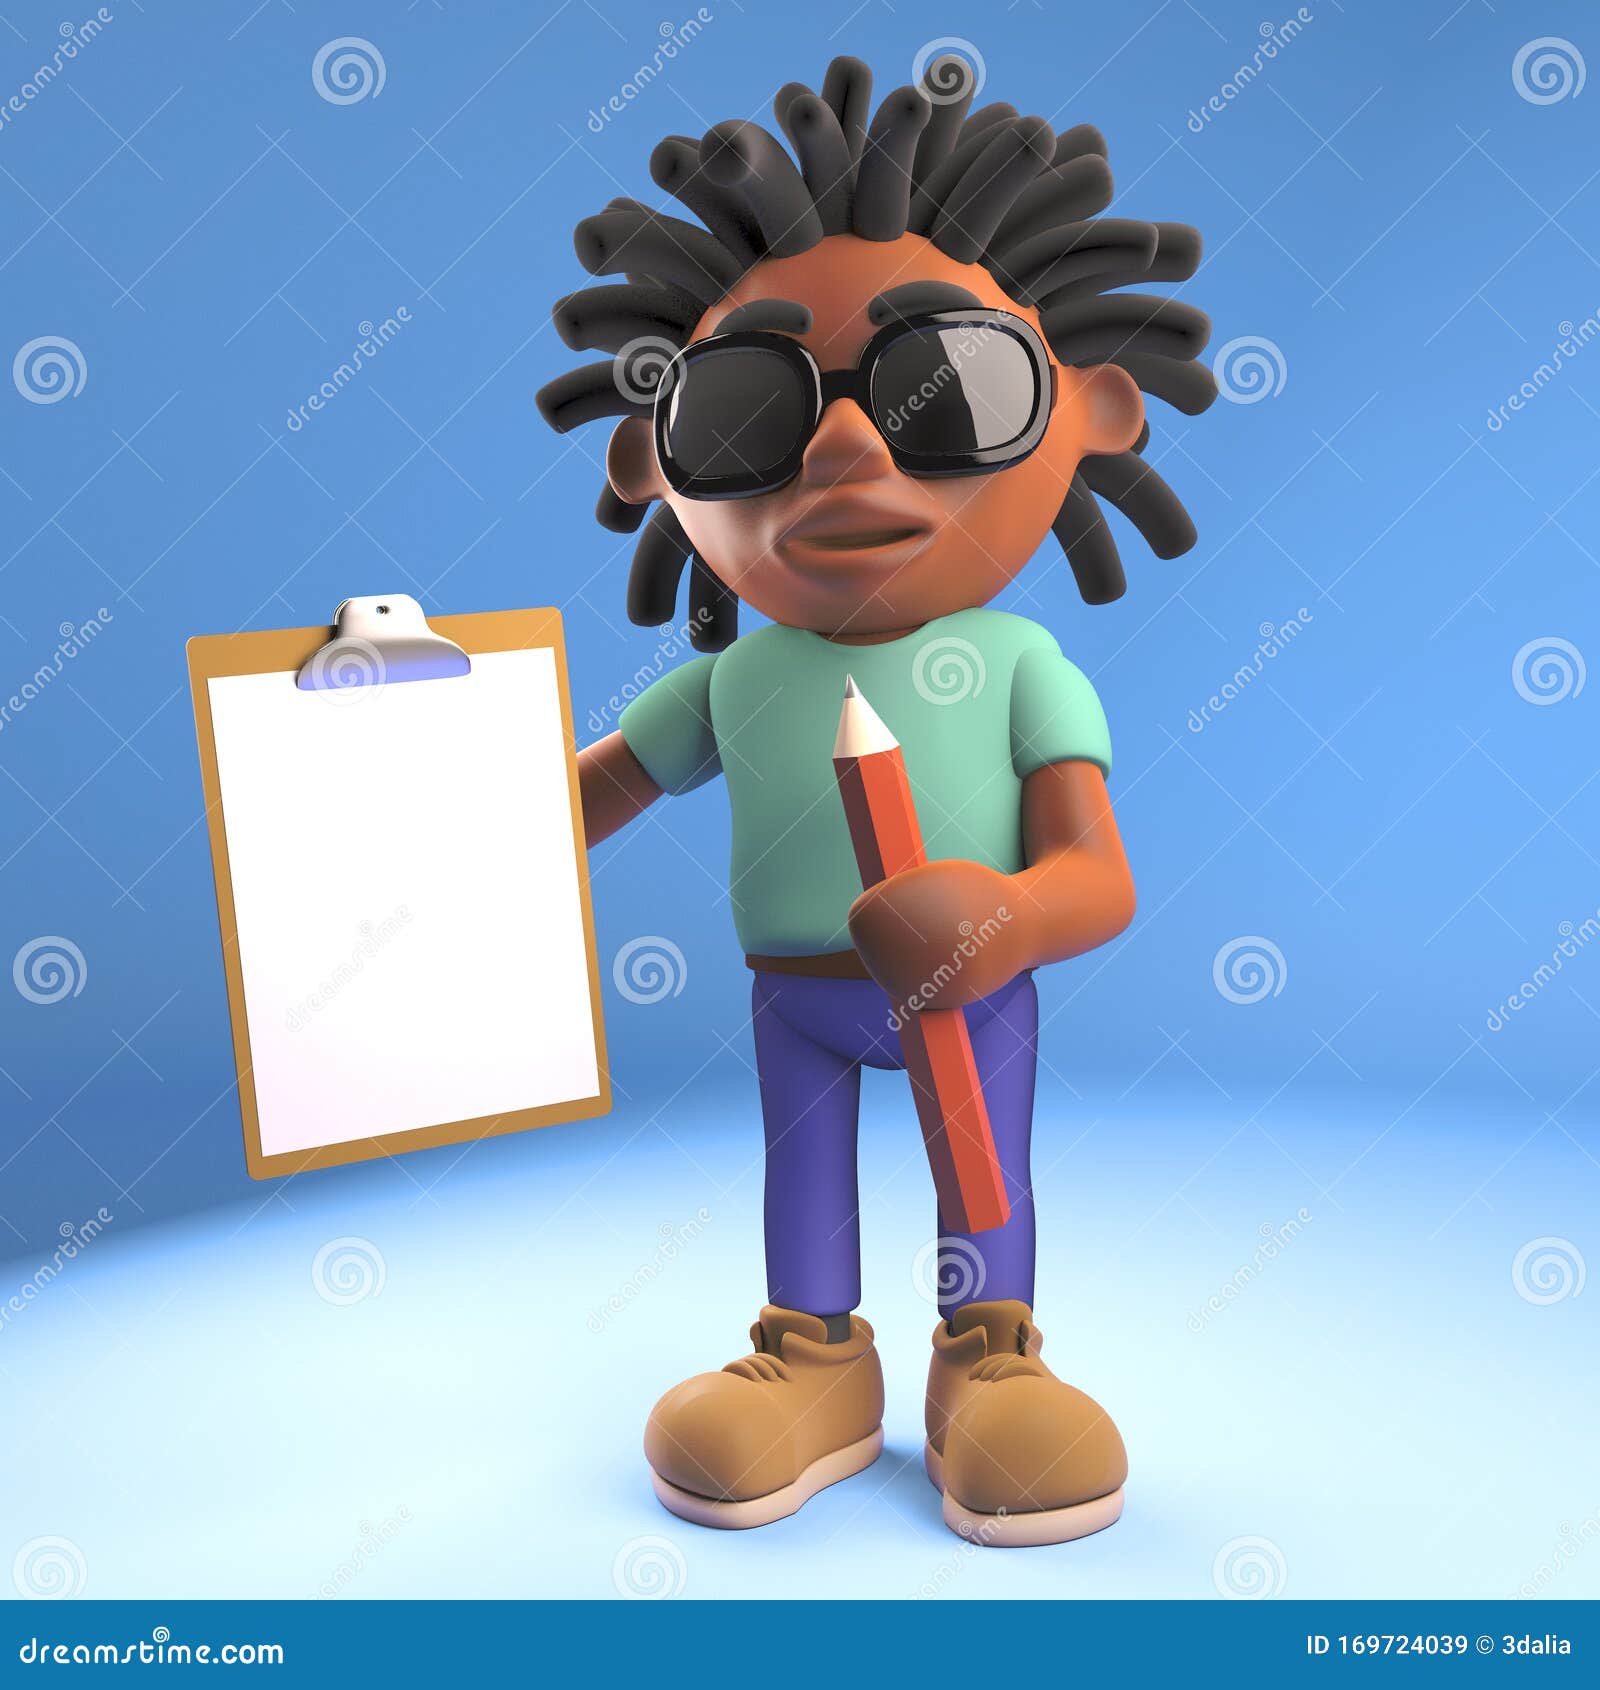 Cartoon 3d Dreadlocked Rastafarian Black Man Holding Clipboard and Pencil,  3d Illustration Stock Illustration - Illustration of questionaire,  diversity: 169724039